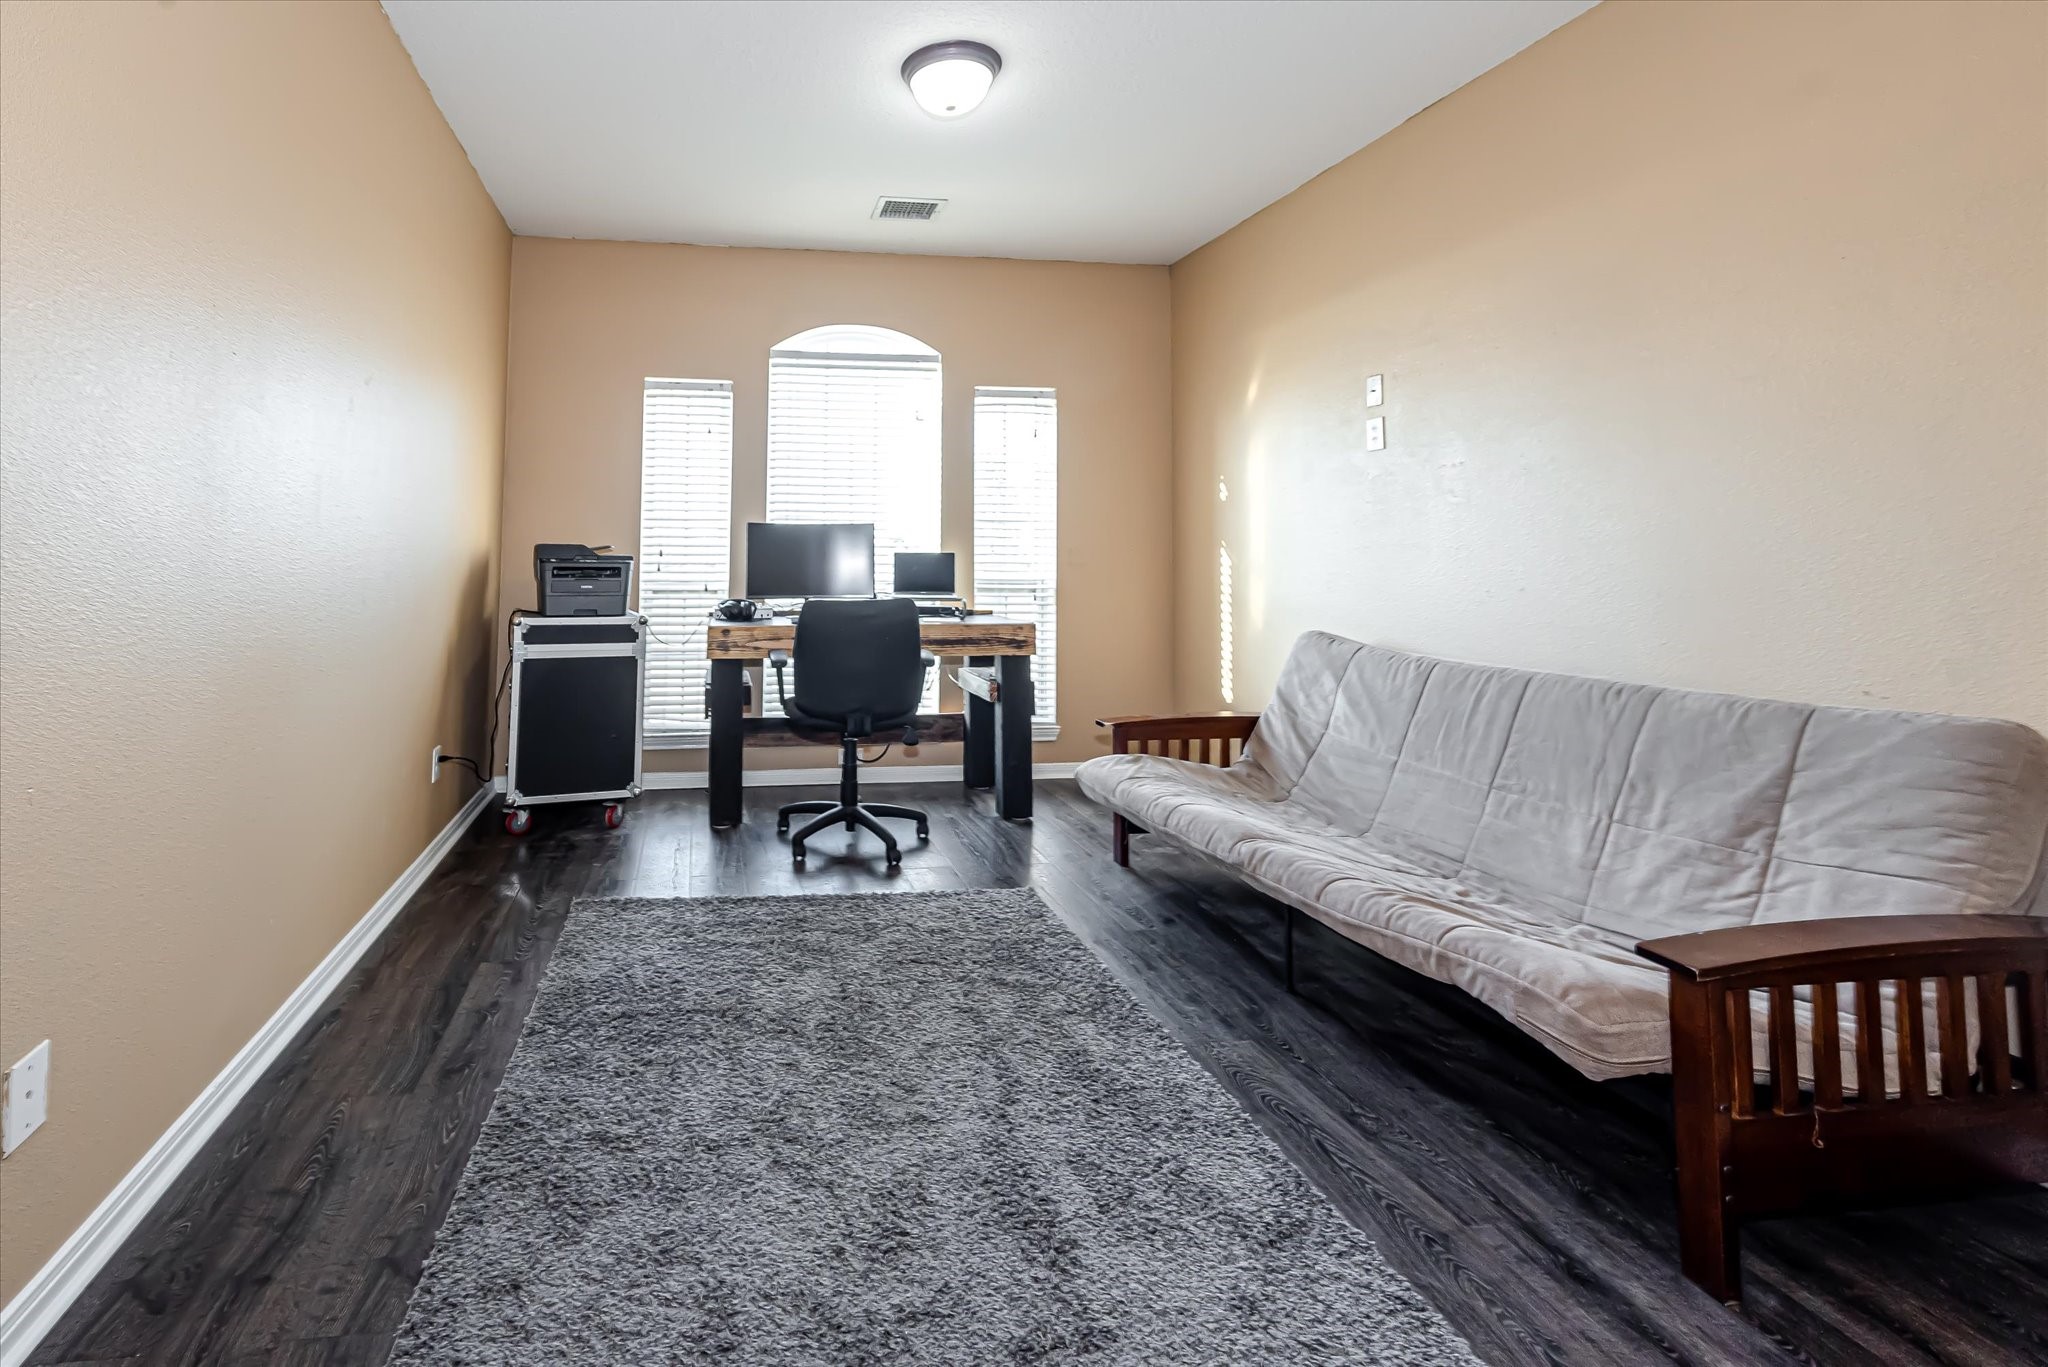 Bedroom 2 - wood-look laminate flooring installed Oct 2022.